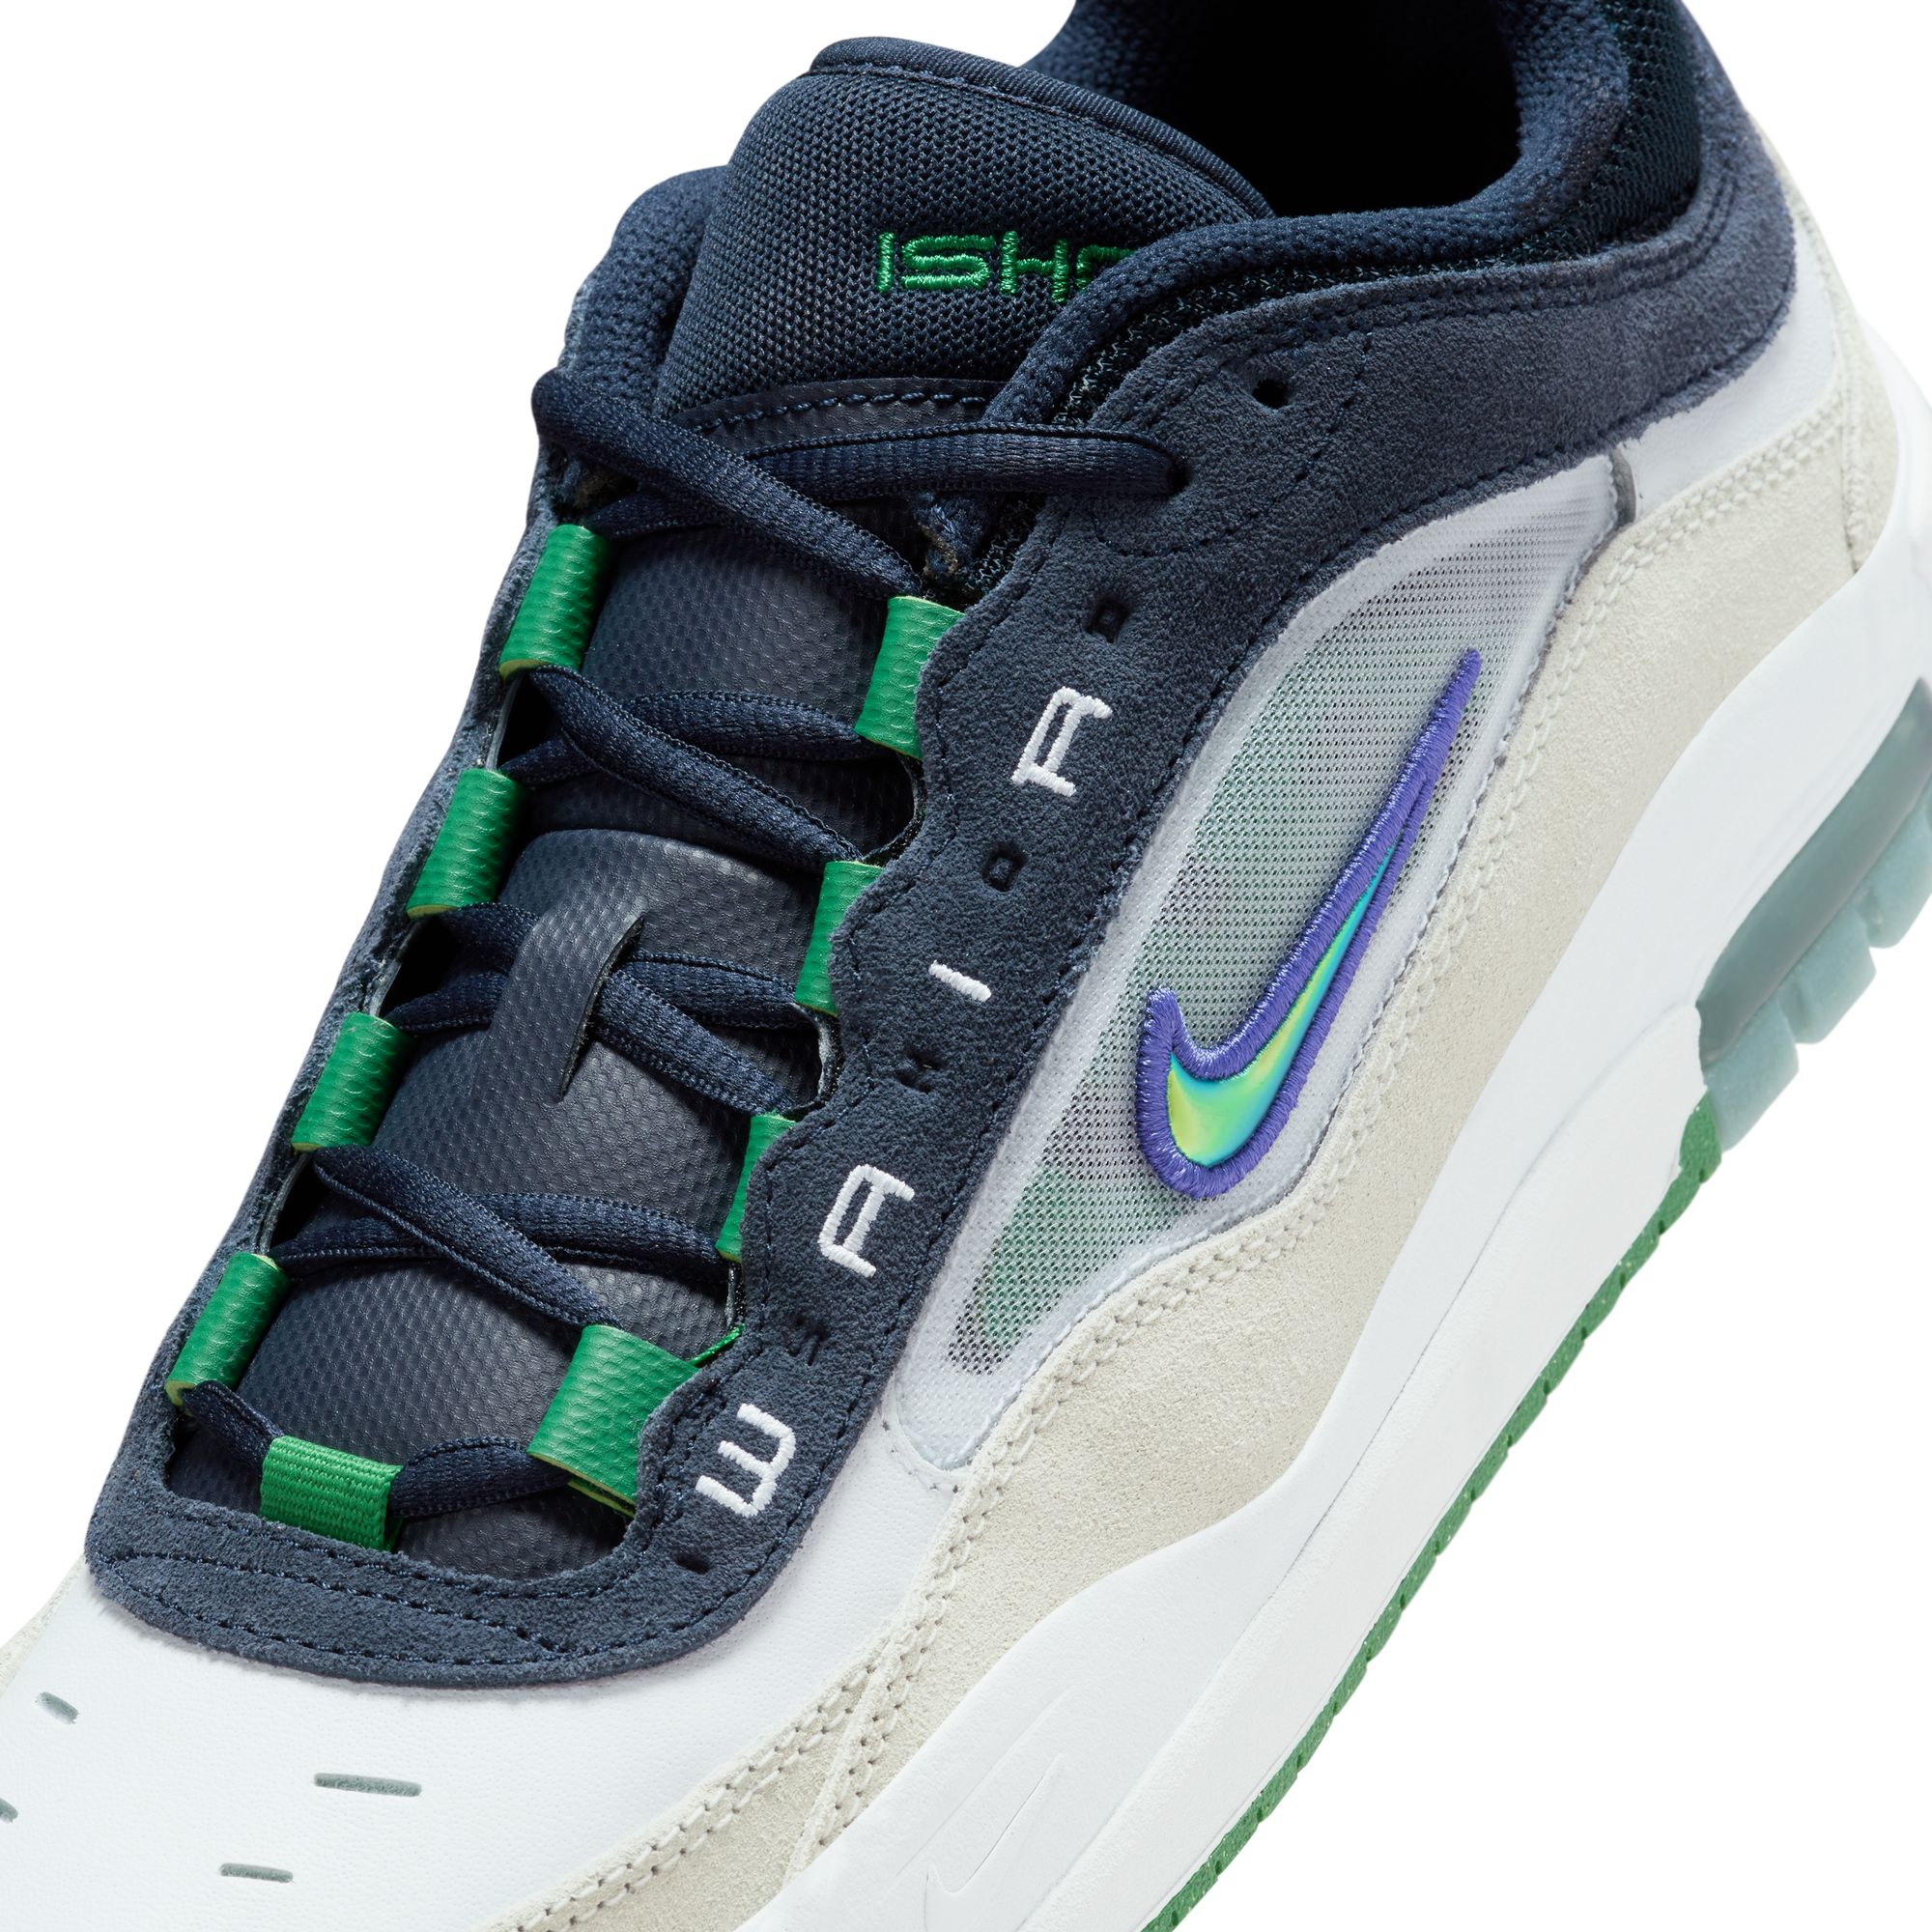 Nike SB Air Max Ishod 2 White/Persian Violet-Obsidian-Pine Green